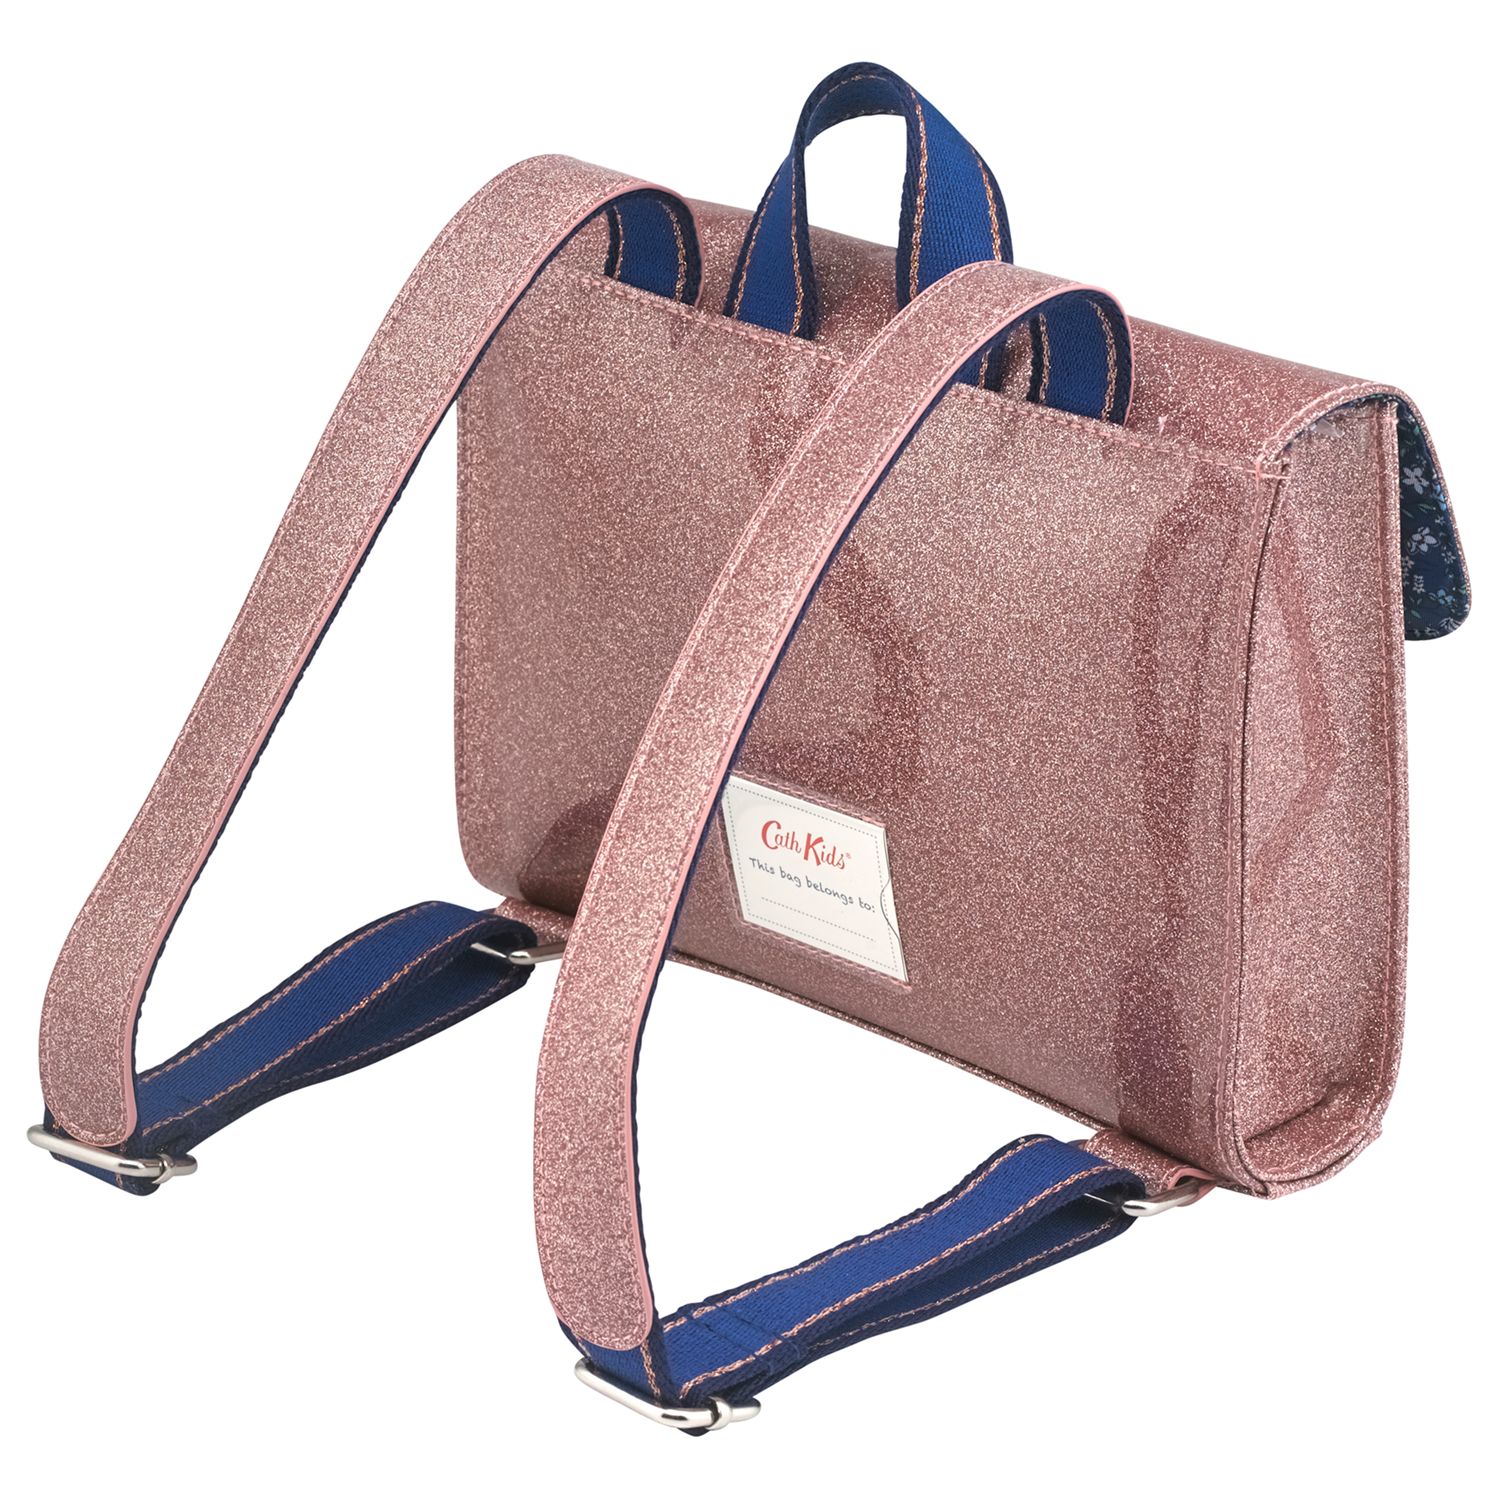 cath kidston satchel backpack